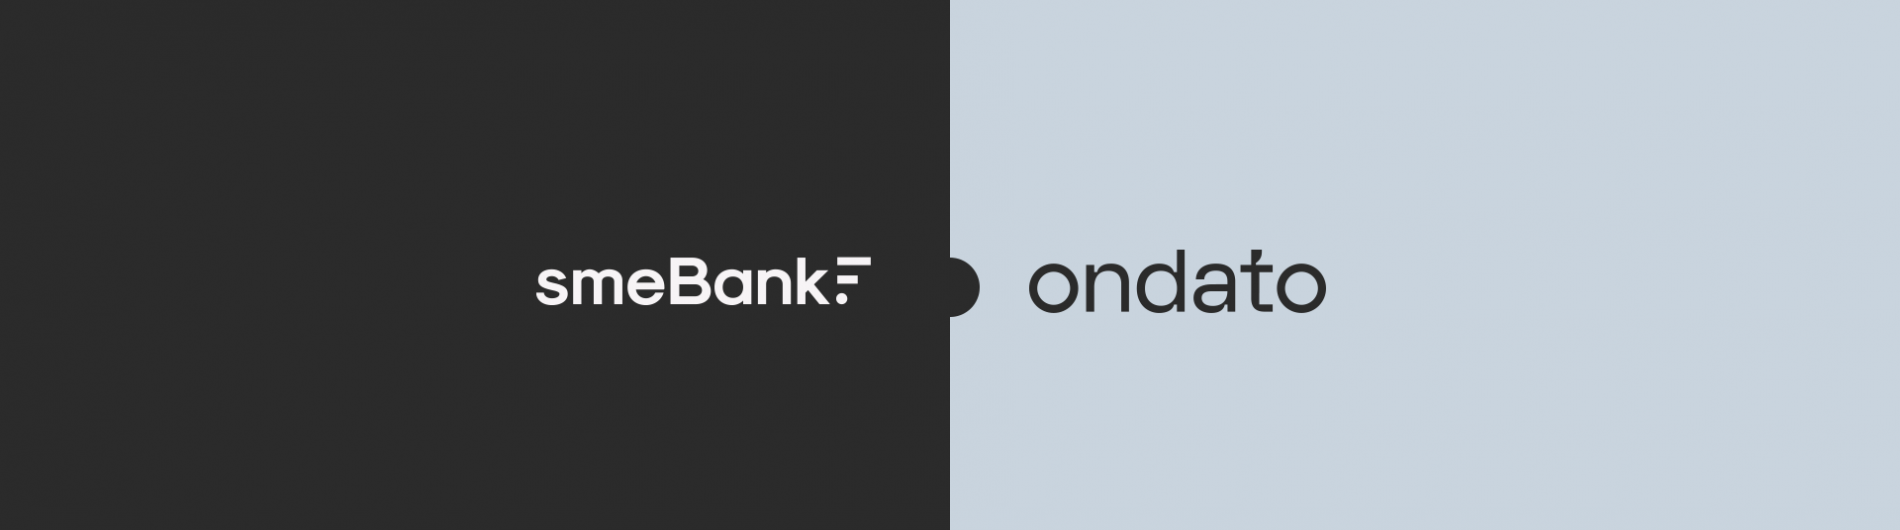 Ondato partnership with SME bank